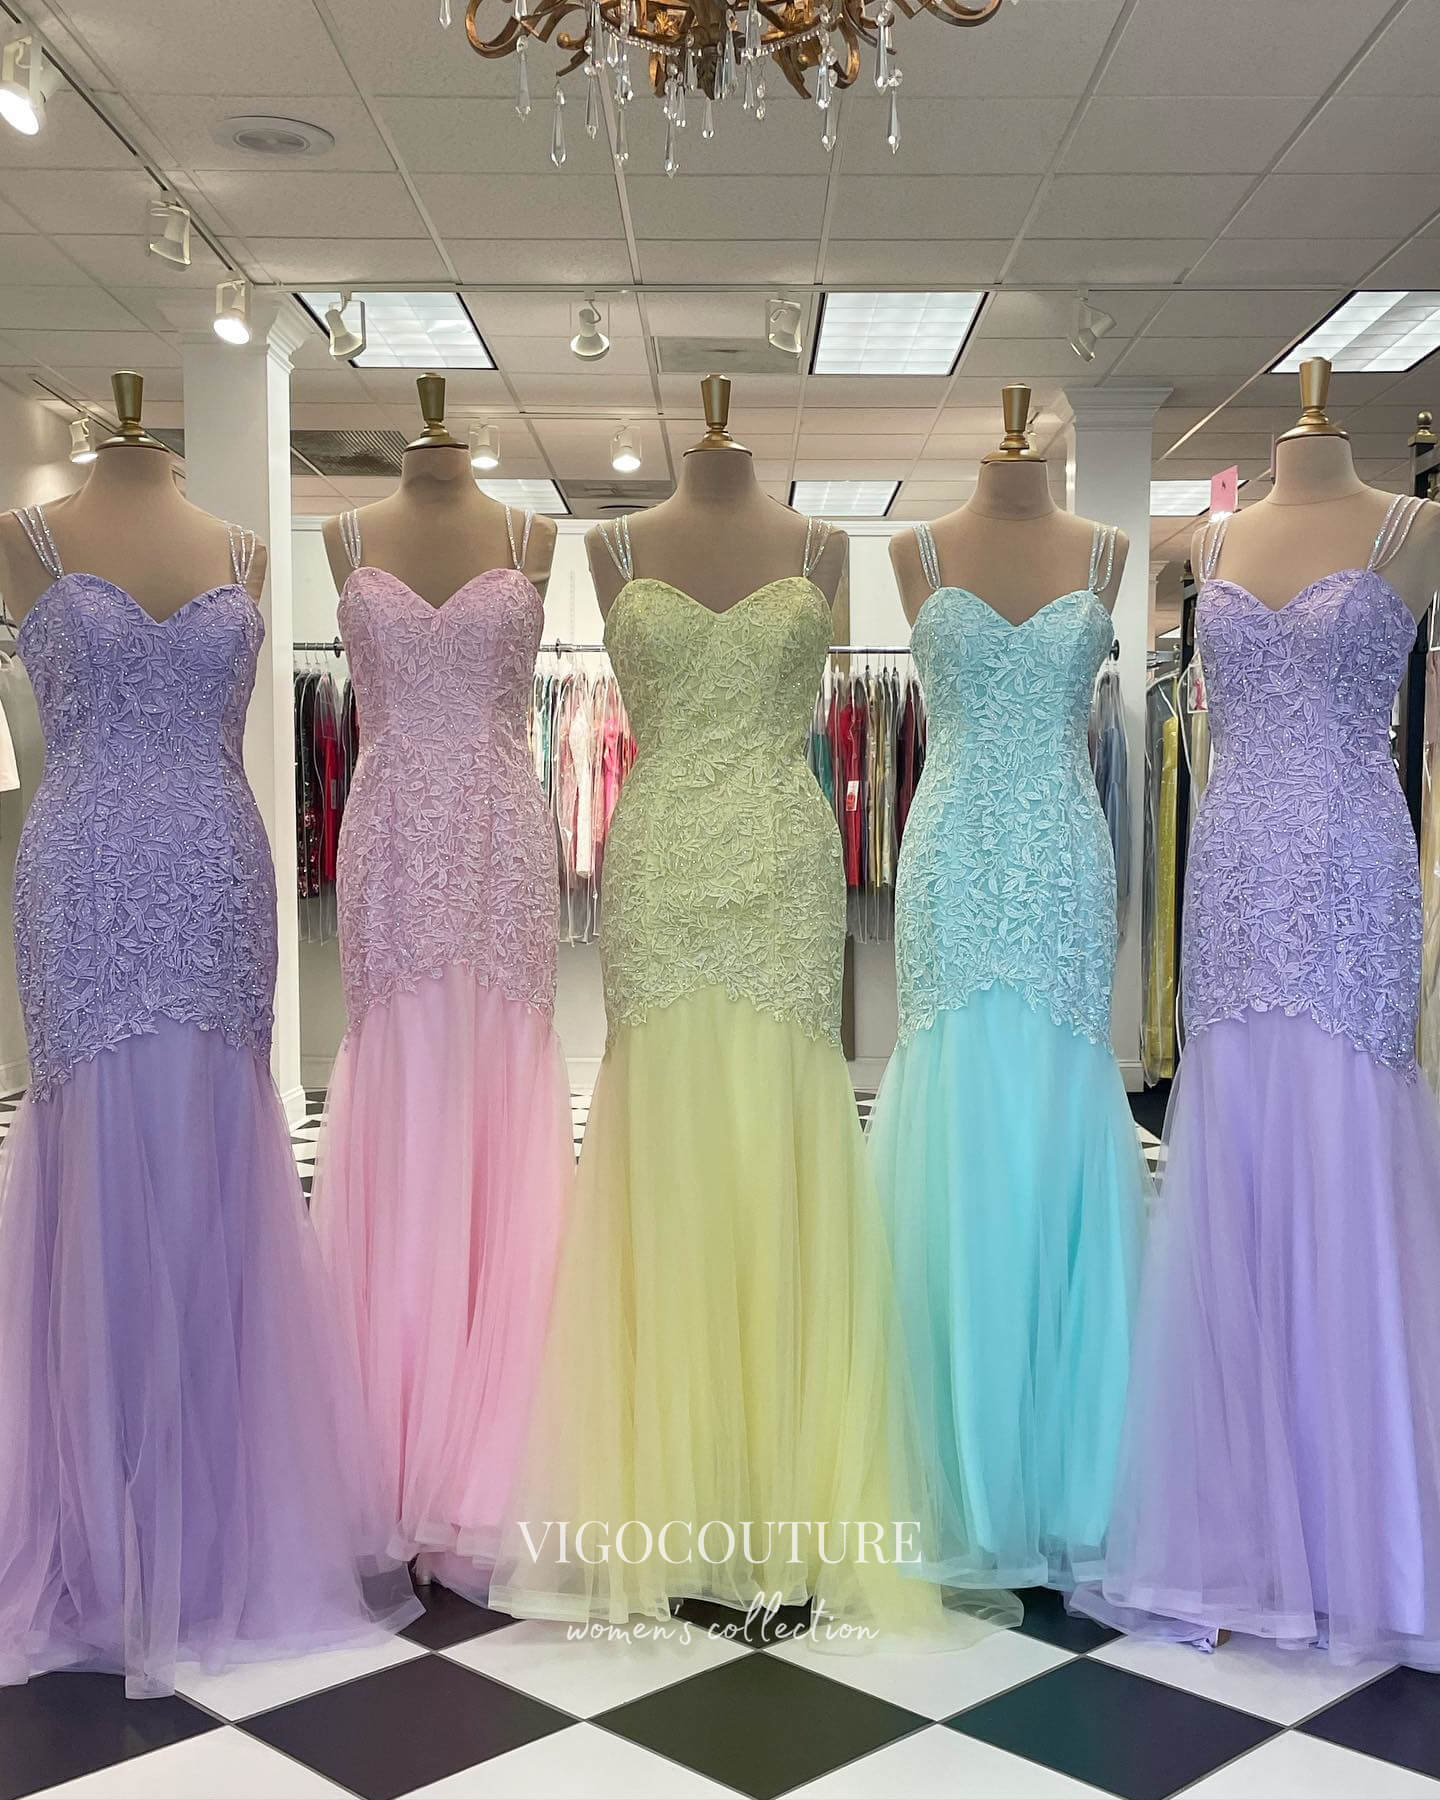 vigocouture-Sparkly Lace Applique Prom Dresses Mermaid Formal Dresses 21537-Prom Dresses-vigocouture-